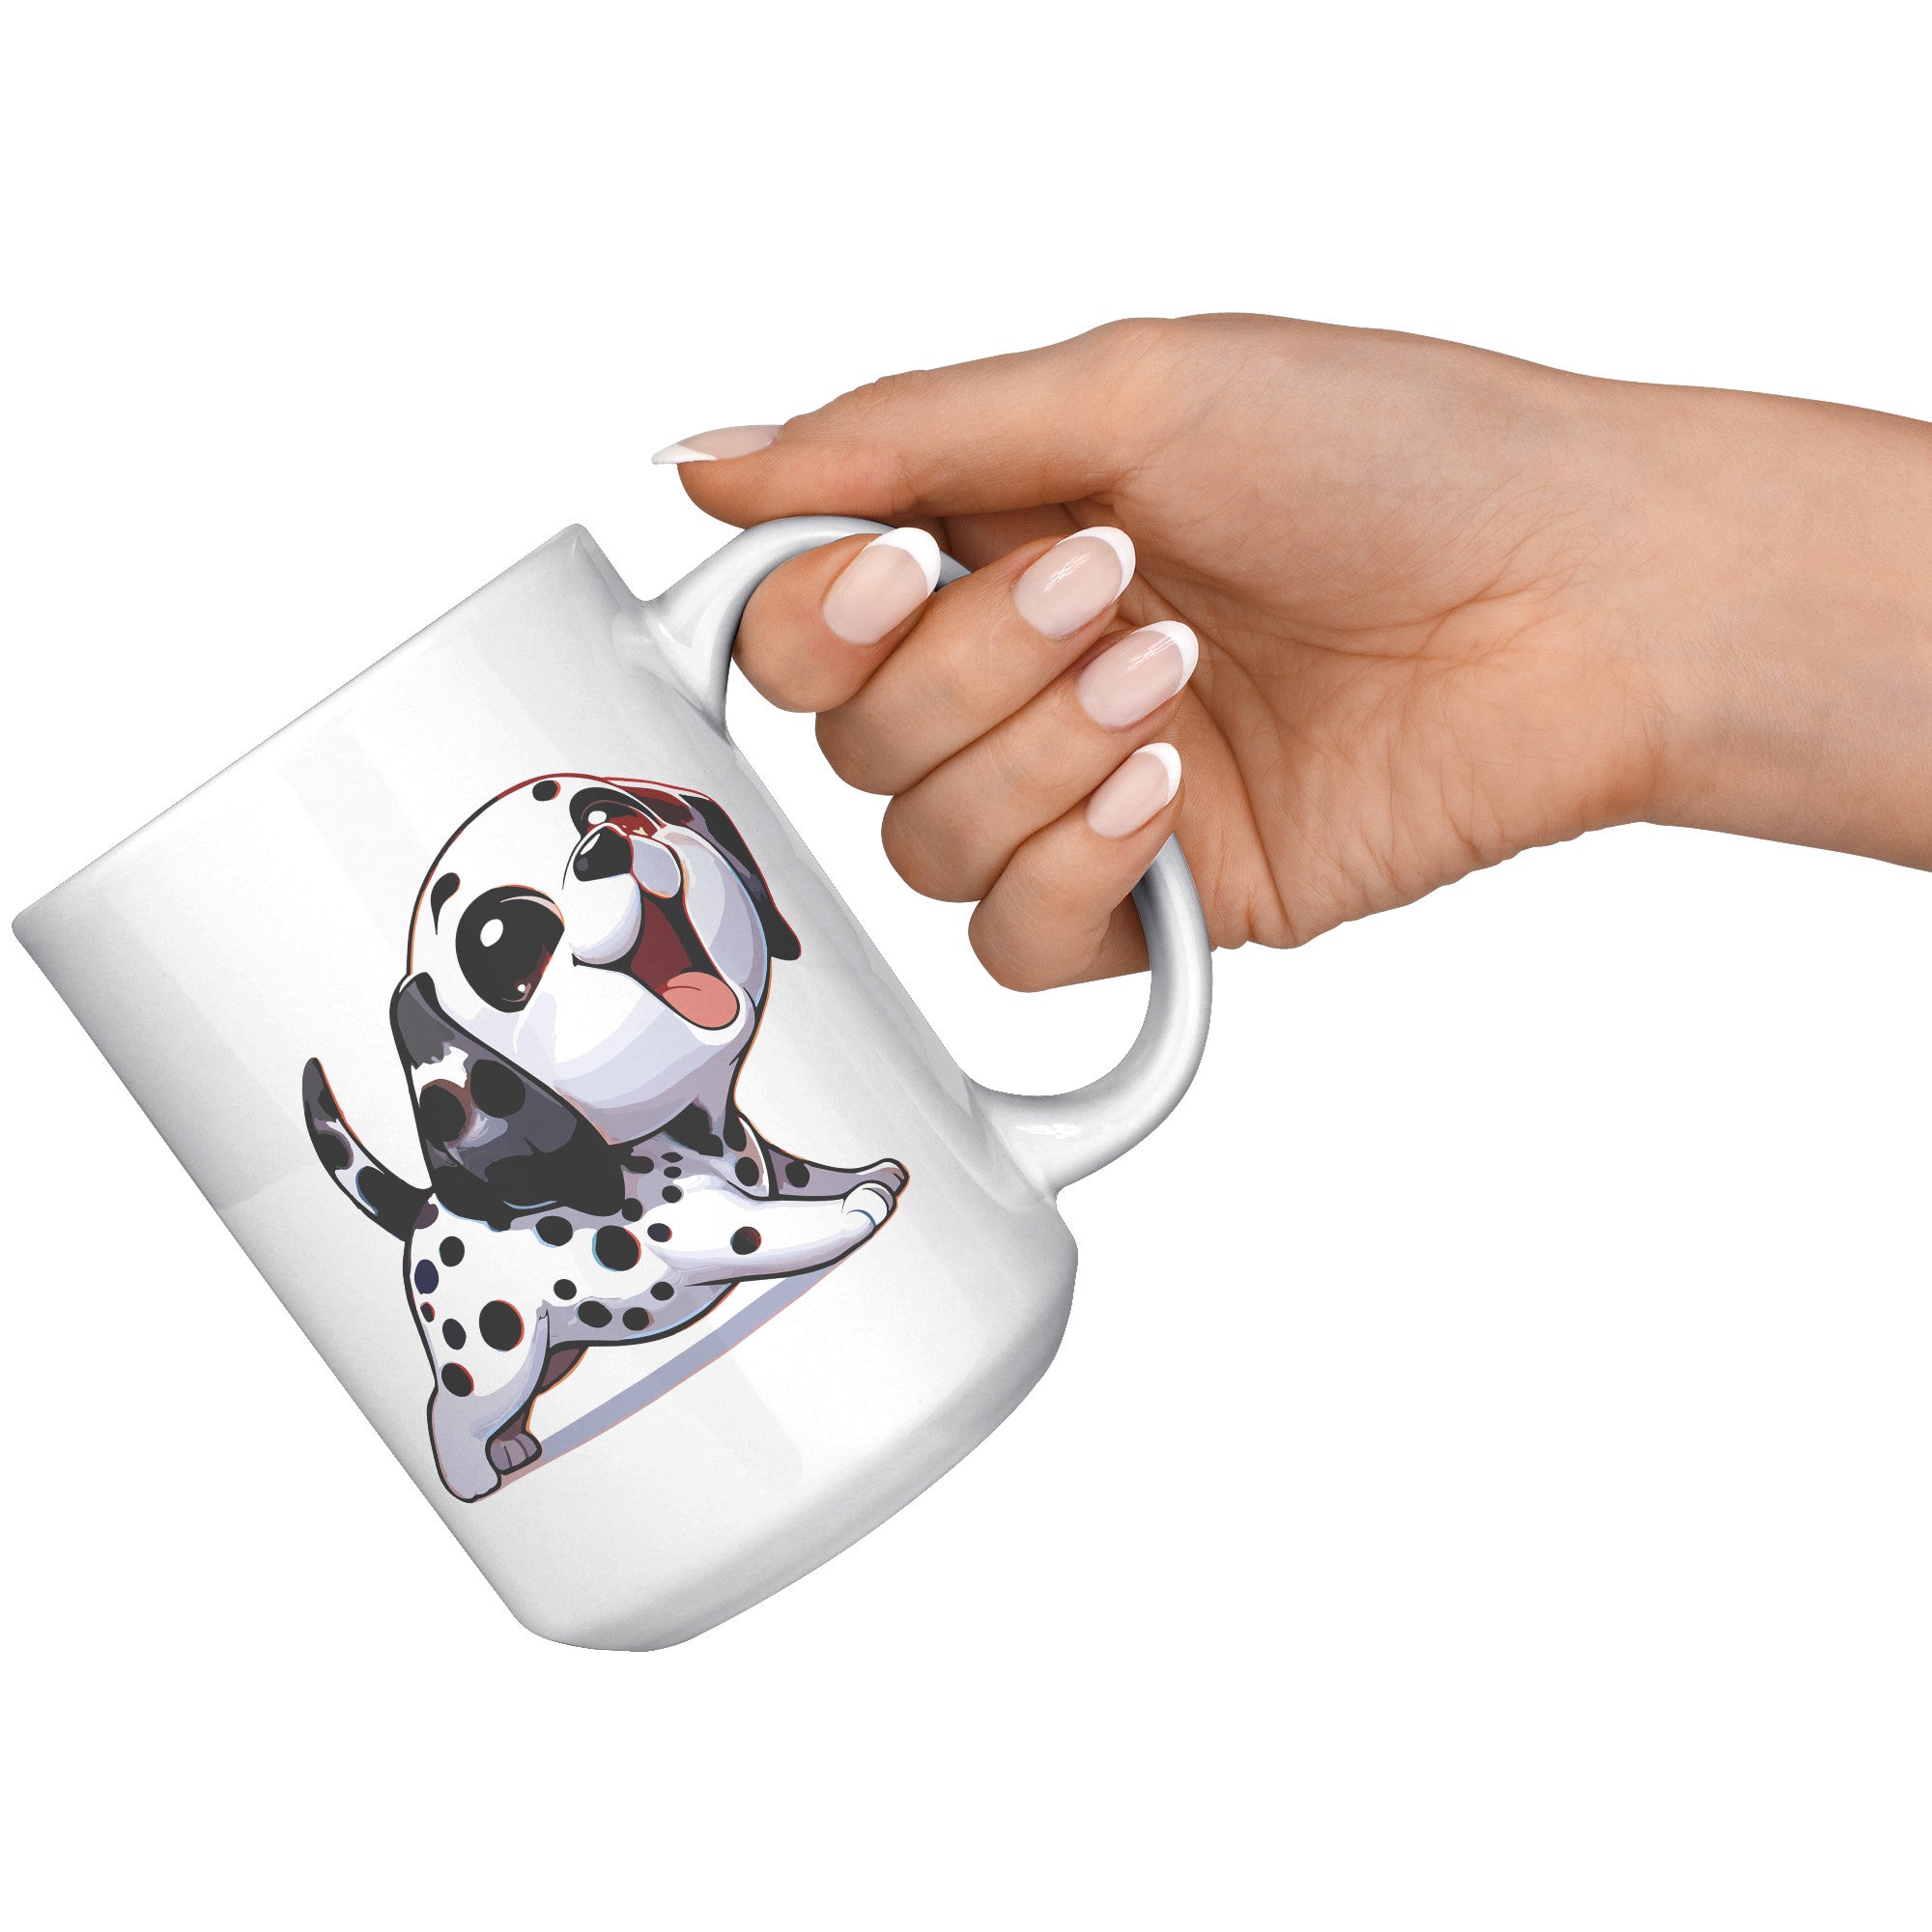 15oz Dalmatian Cartoon Coffee Mug - Spotted Dog Lover Coffee Mug - Perfect Gift for Dalmatian Owners - Fun Firehouse Dog Coffee Mug" - H1